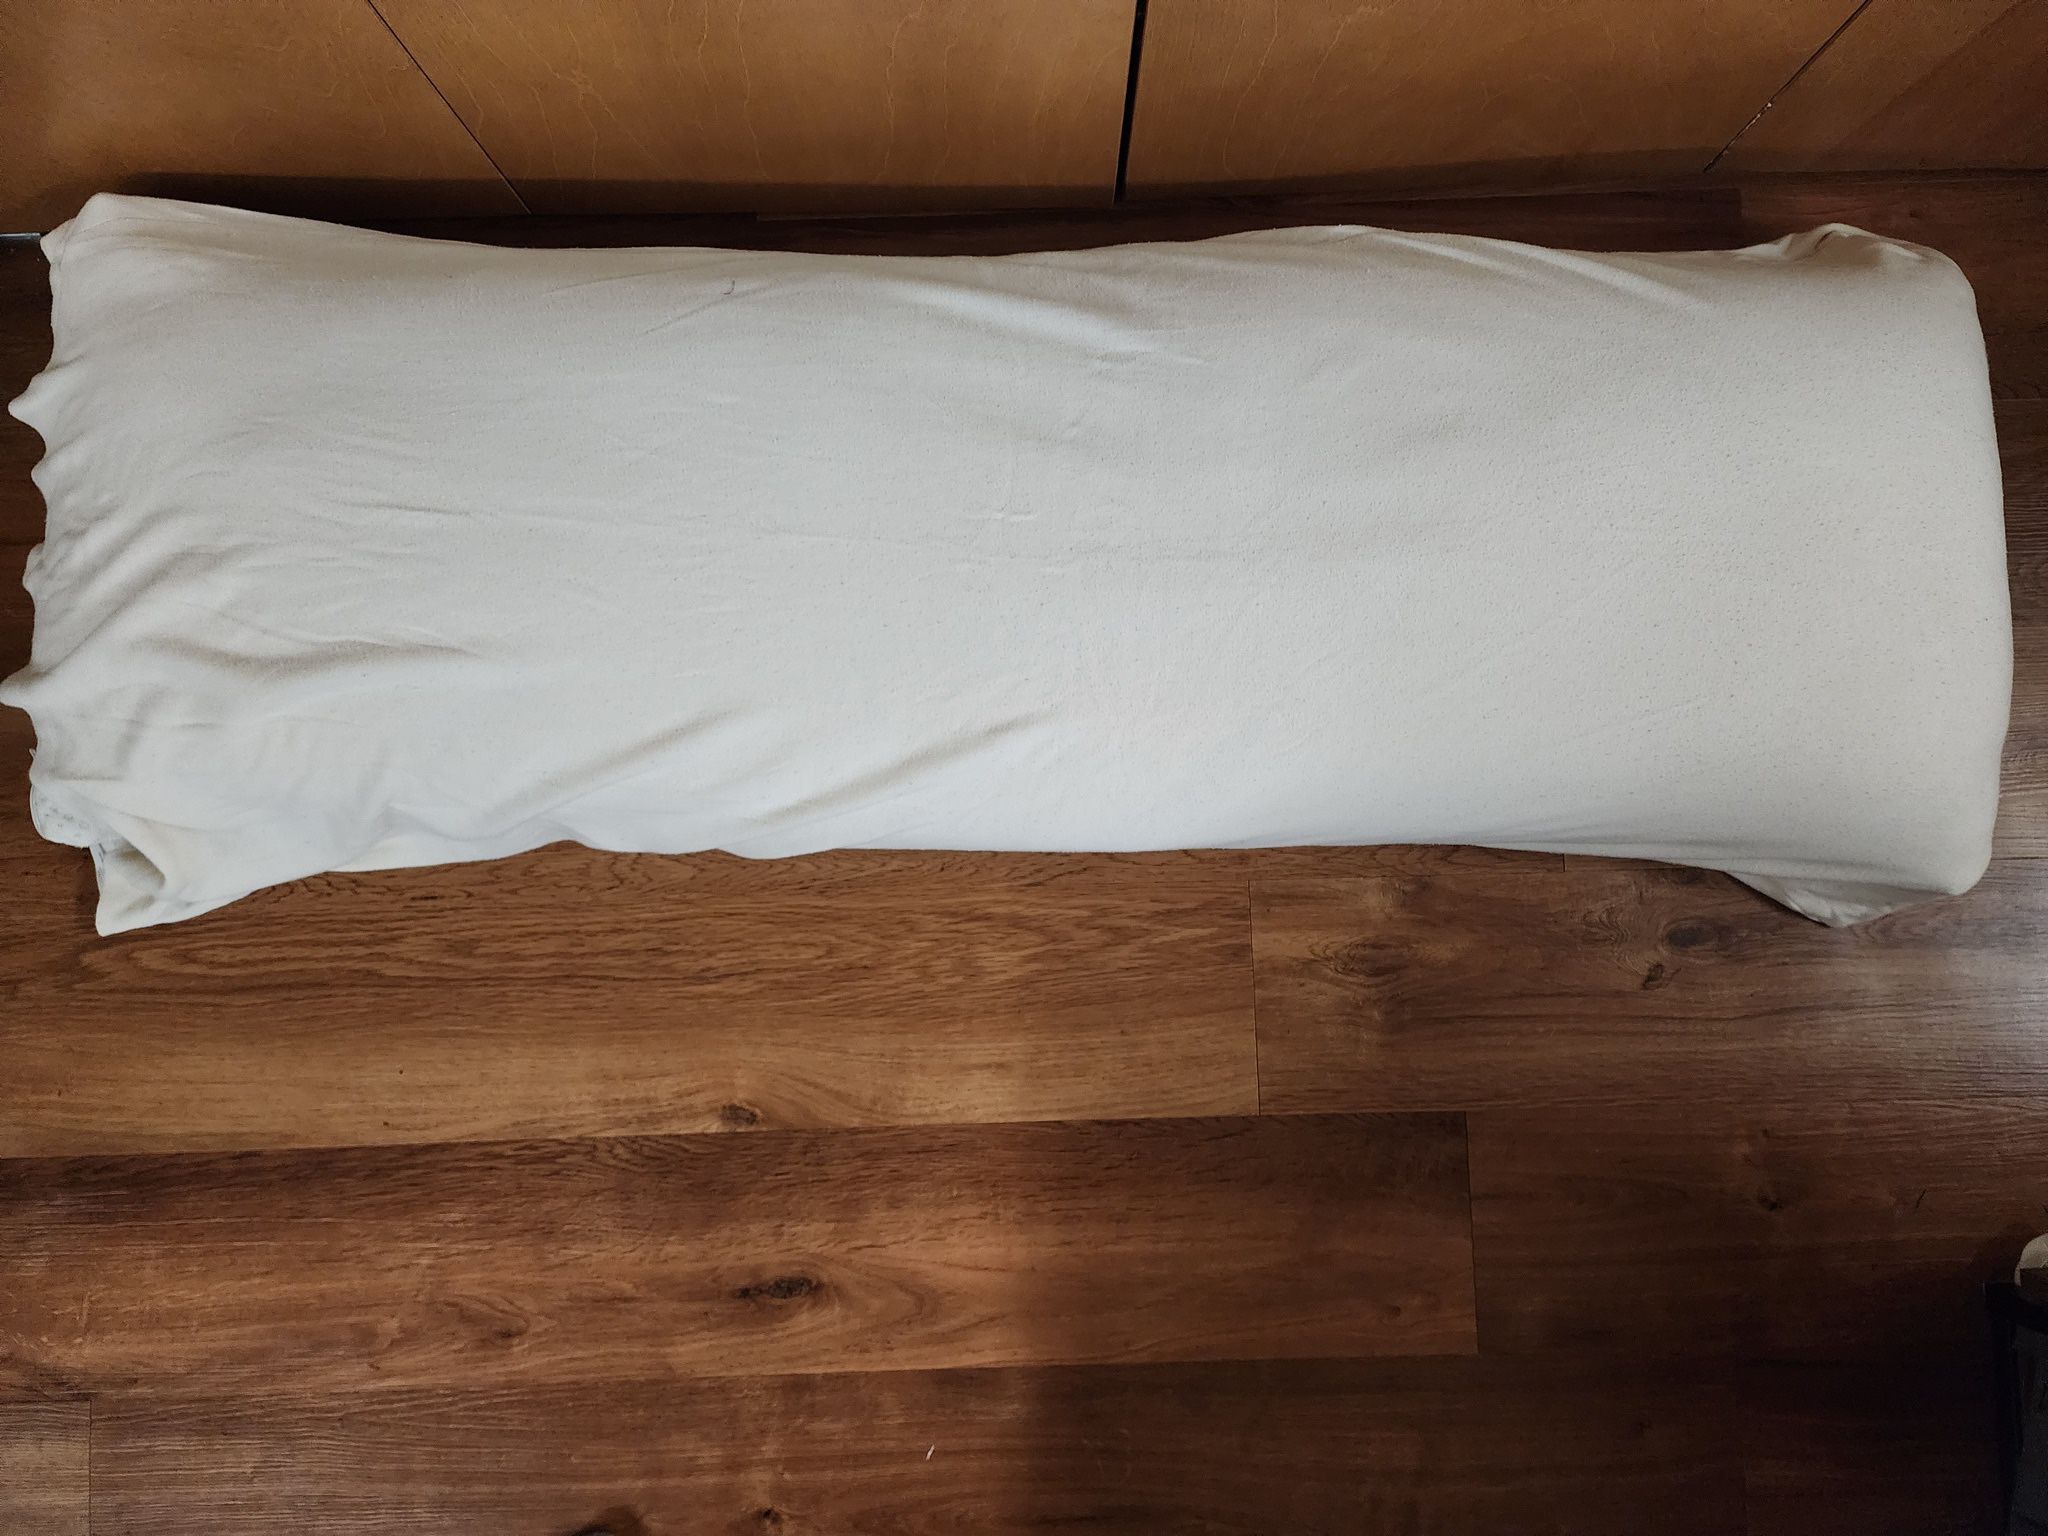 Lot Snuggle-pedic full body pillow, snuggle-medic bamboo body pillow case, sherpa body pillow case